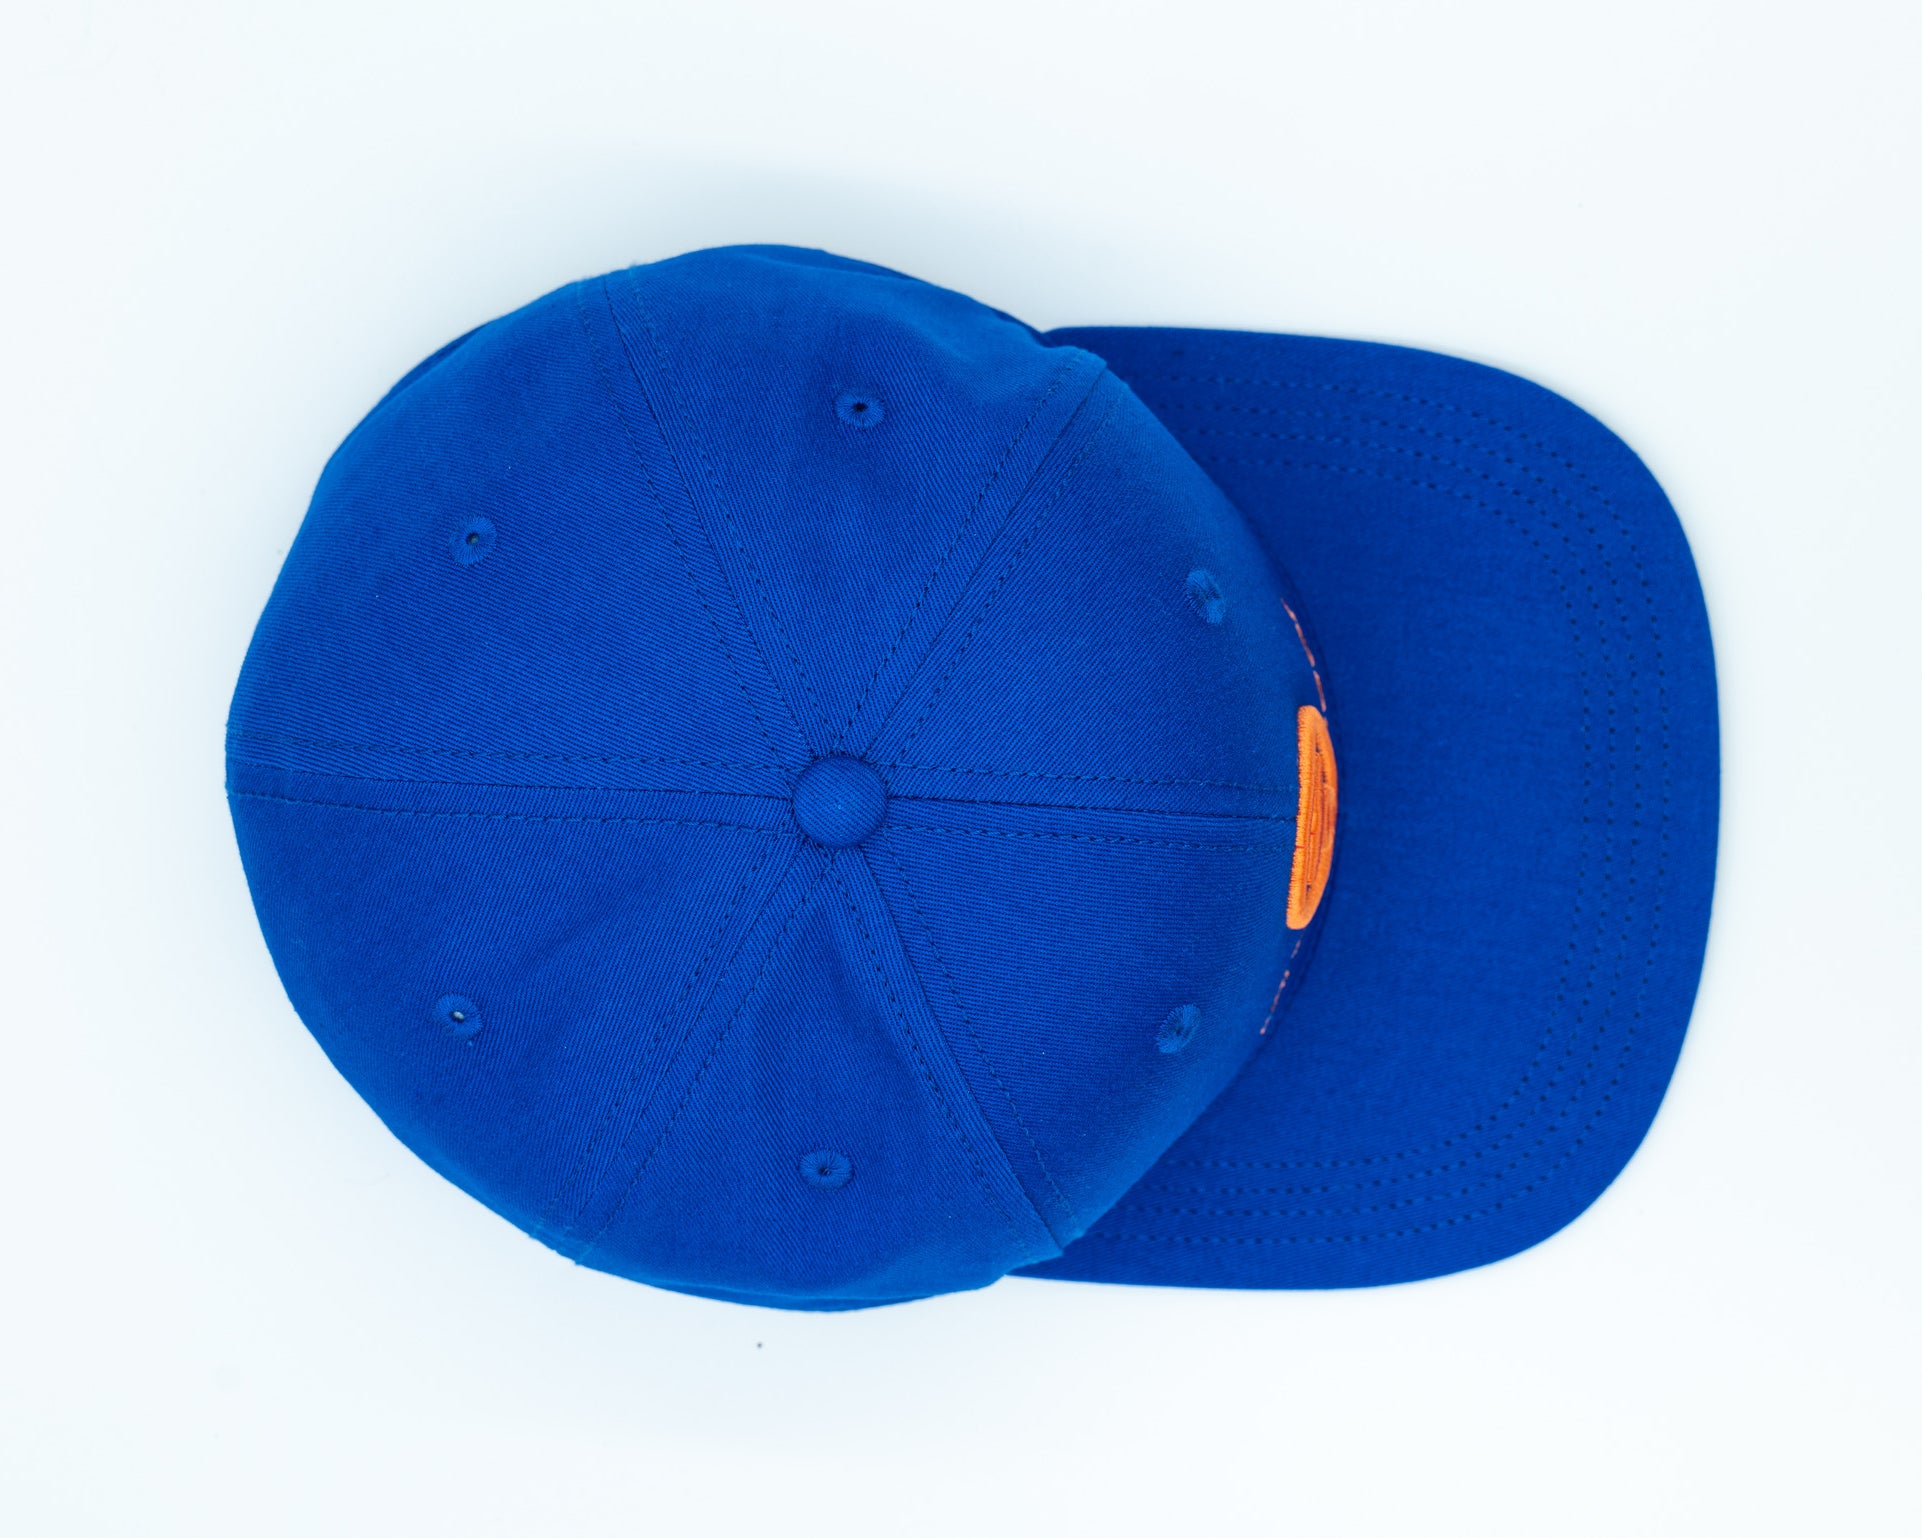 OranbearSTL Baseball Hat in blue top